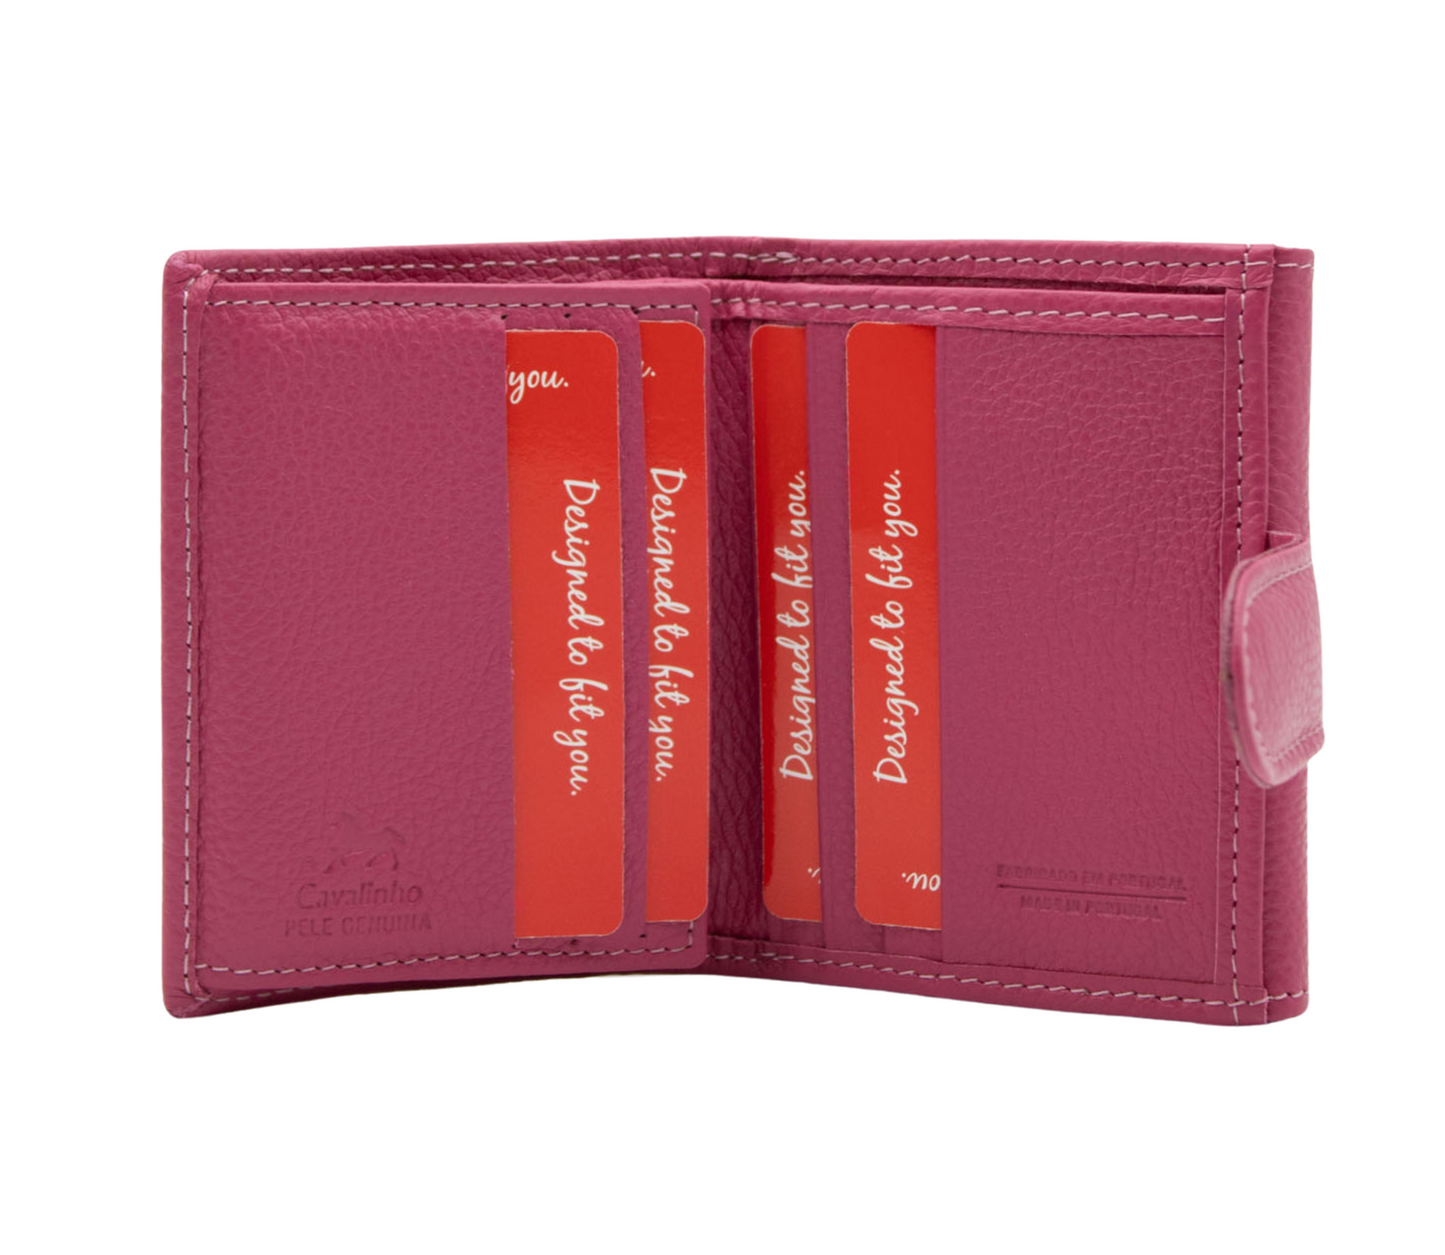 Cavalinho Muse Leather Mini Wallet - HotPink - 28300530.18_P03